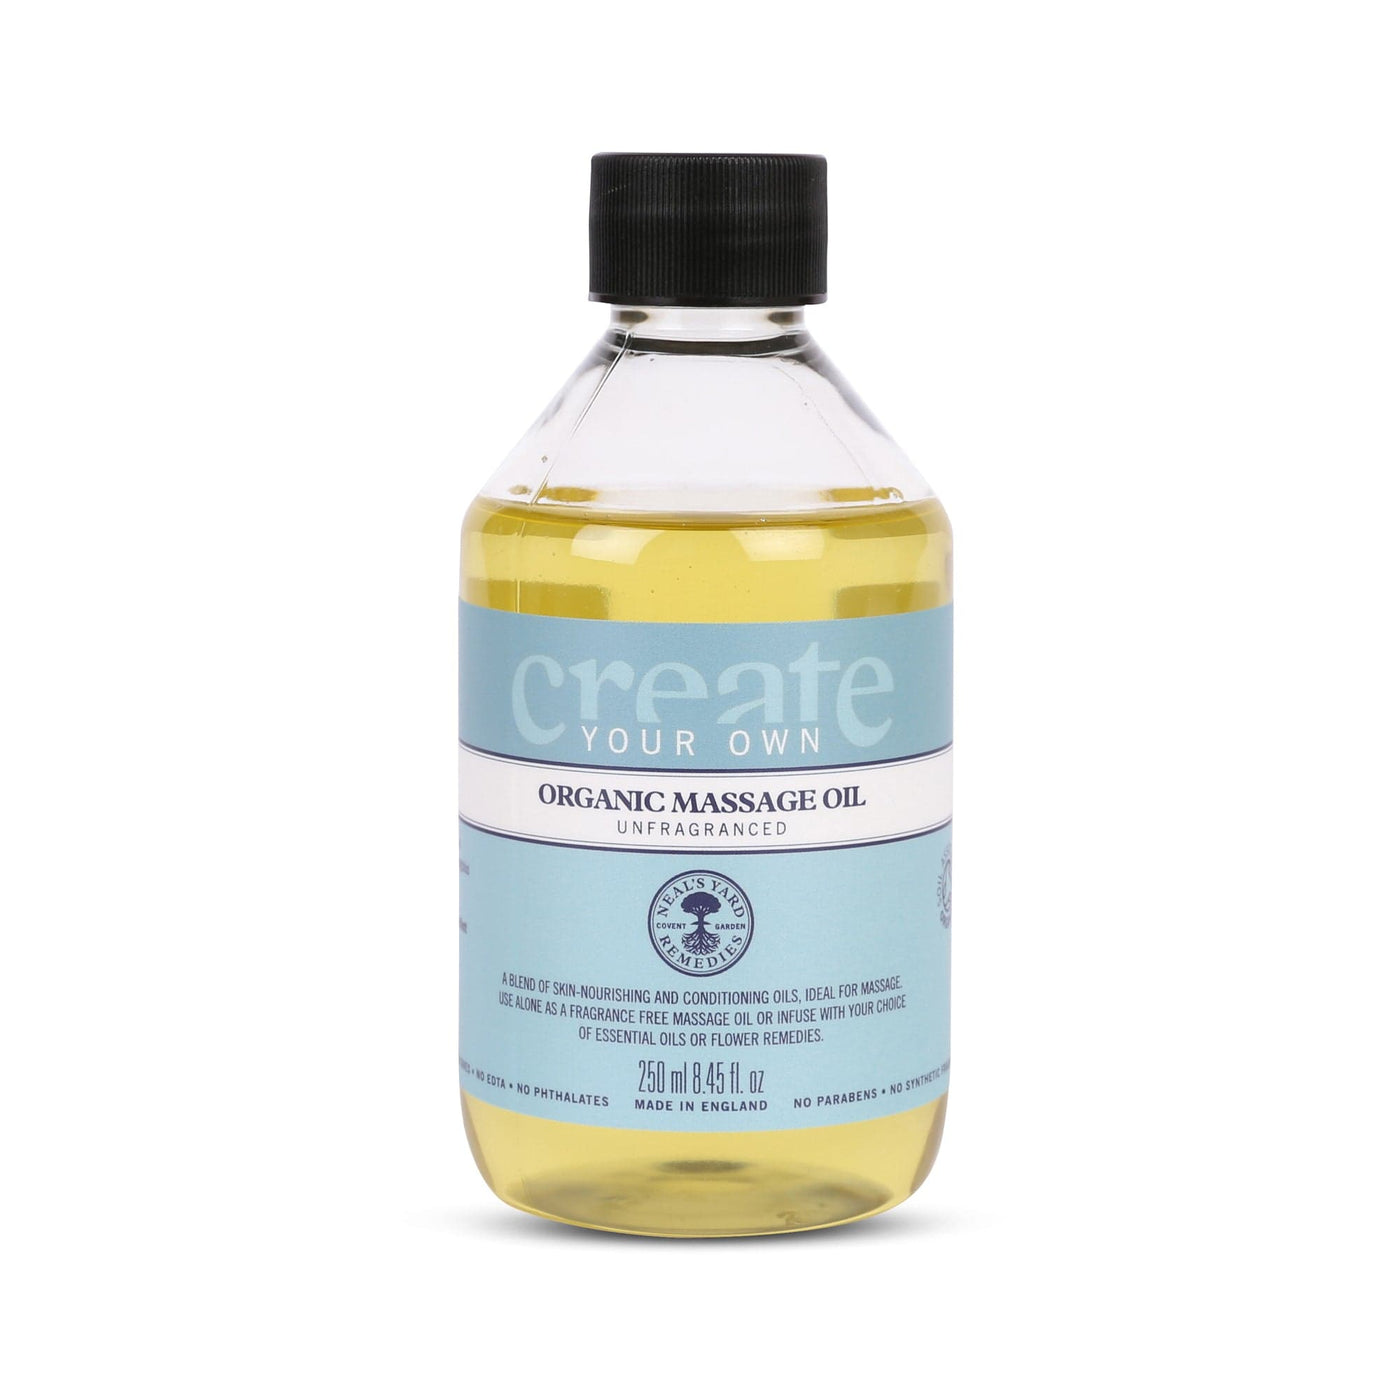 Neal's Yard Remedies Create Your Own Organic Massage Oil 250ml